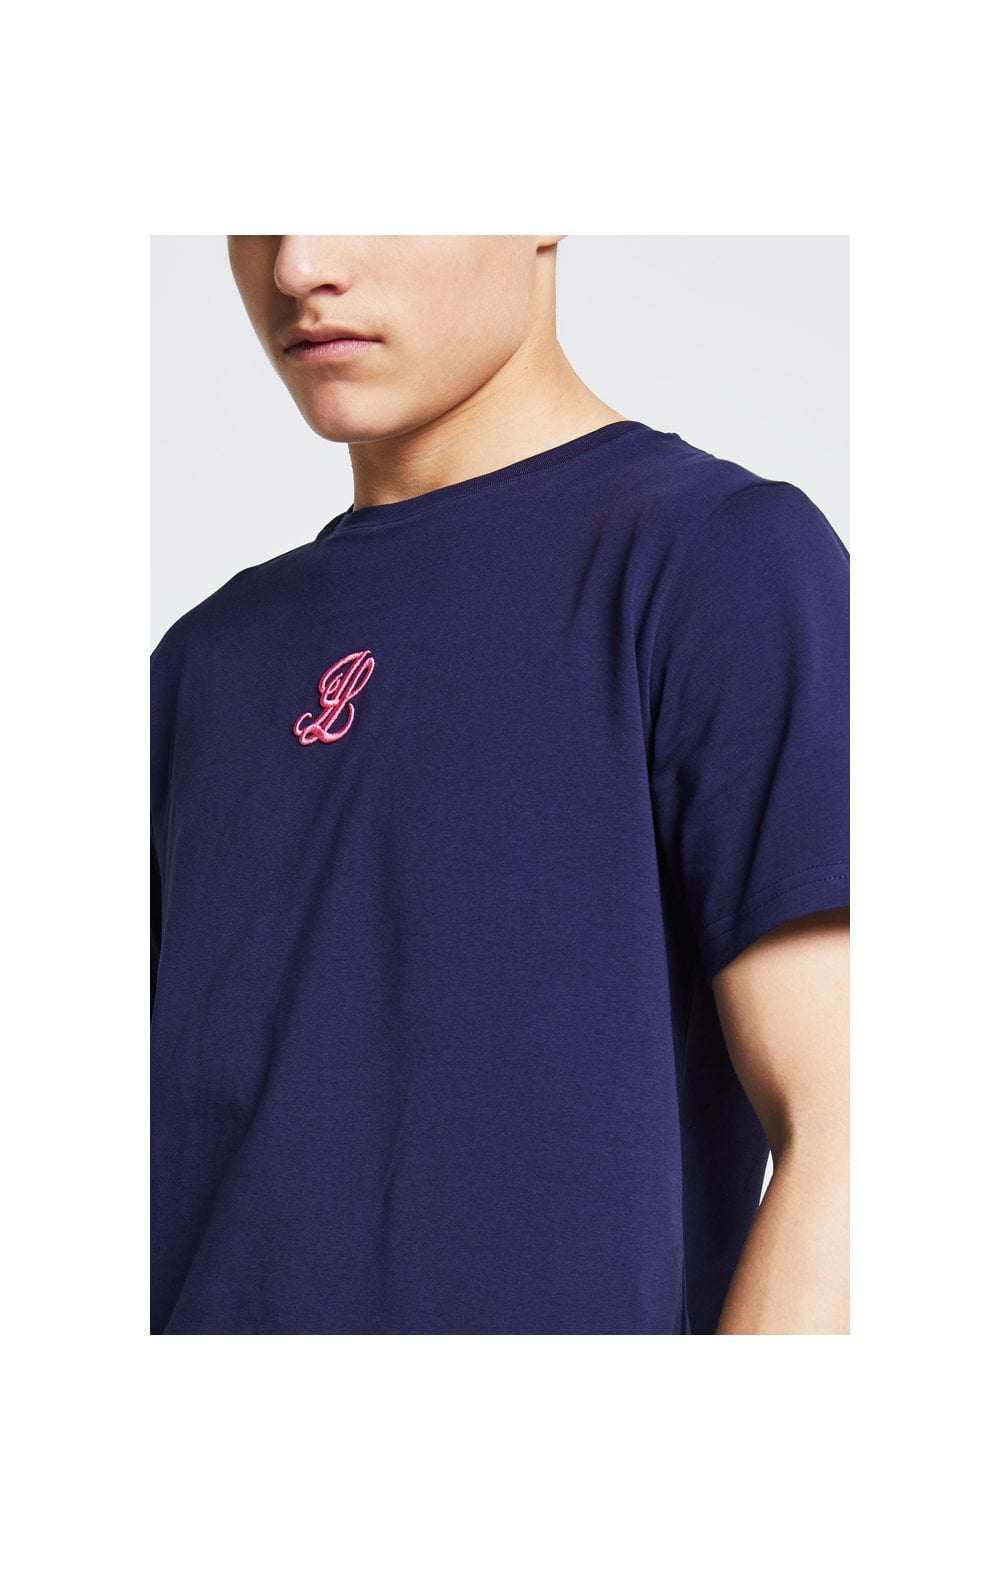 Illusive London T-Shirt Schulterfrei - Marineblau und Neon Rosa Camouflage (1)